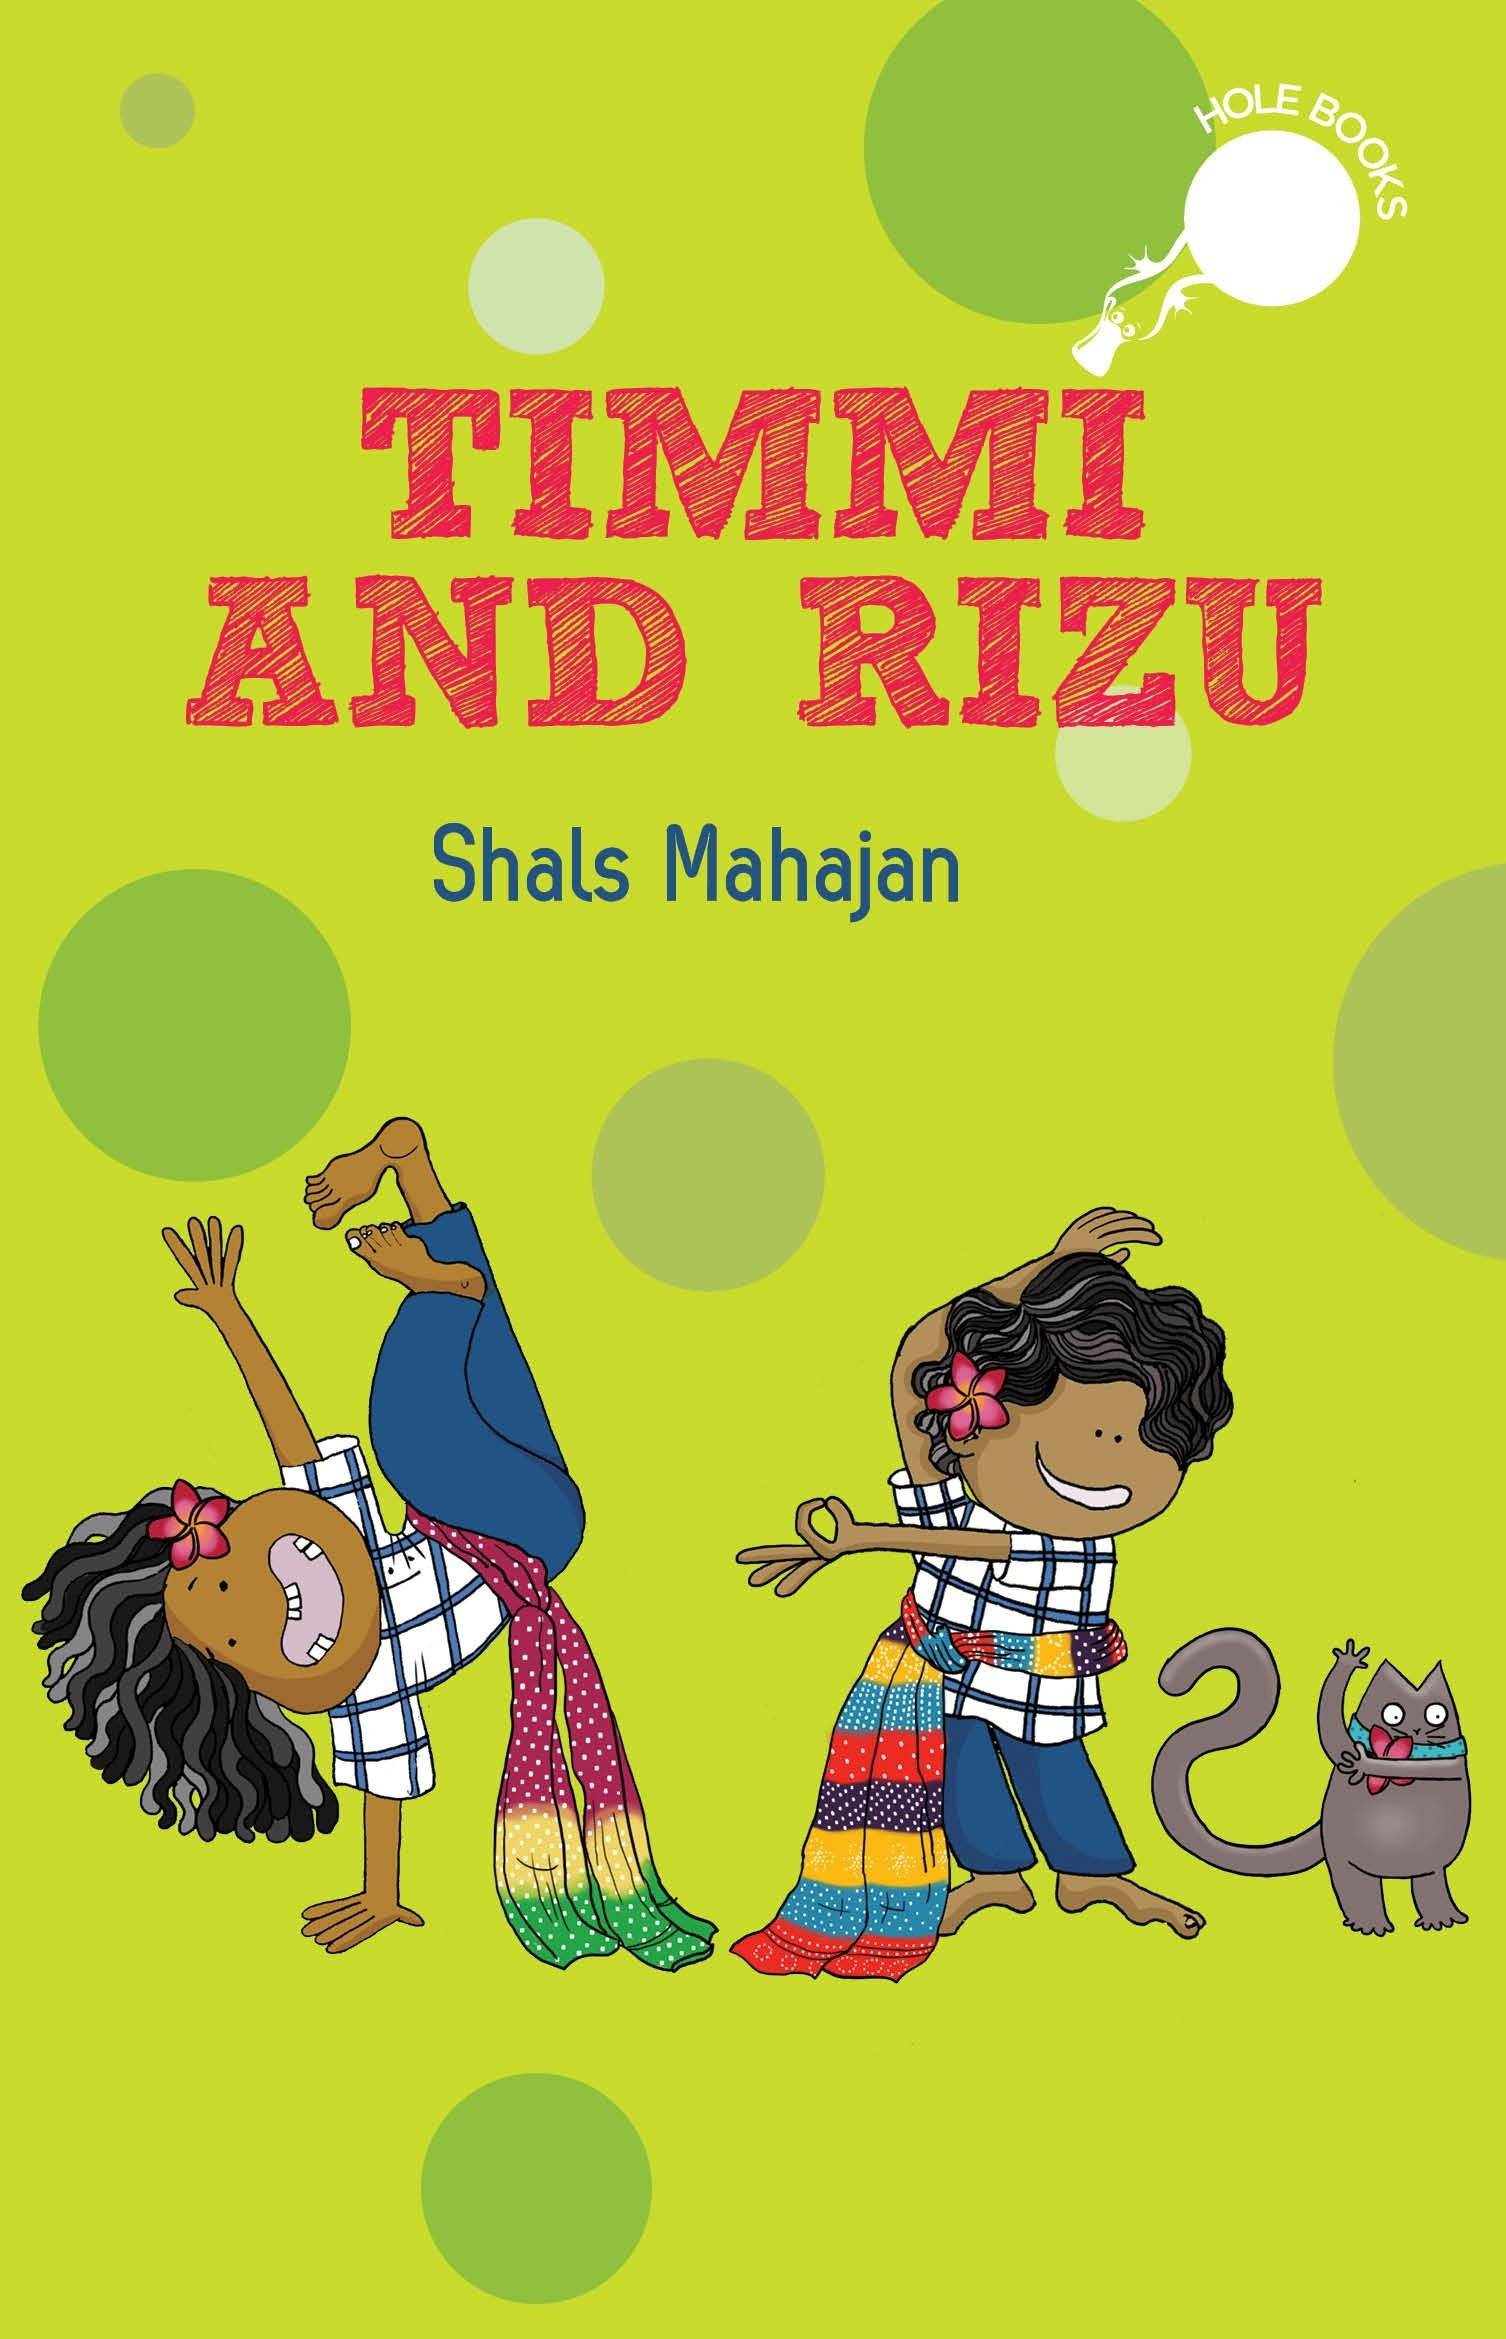 IMG : Hole book-Timmi and Rizu